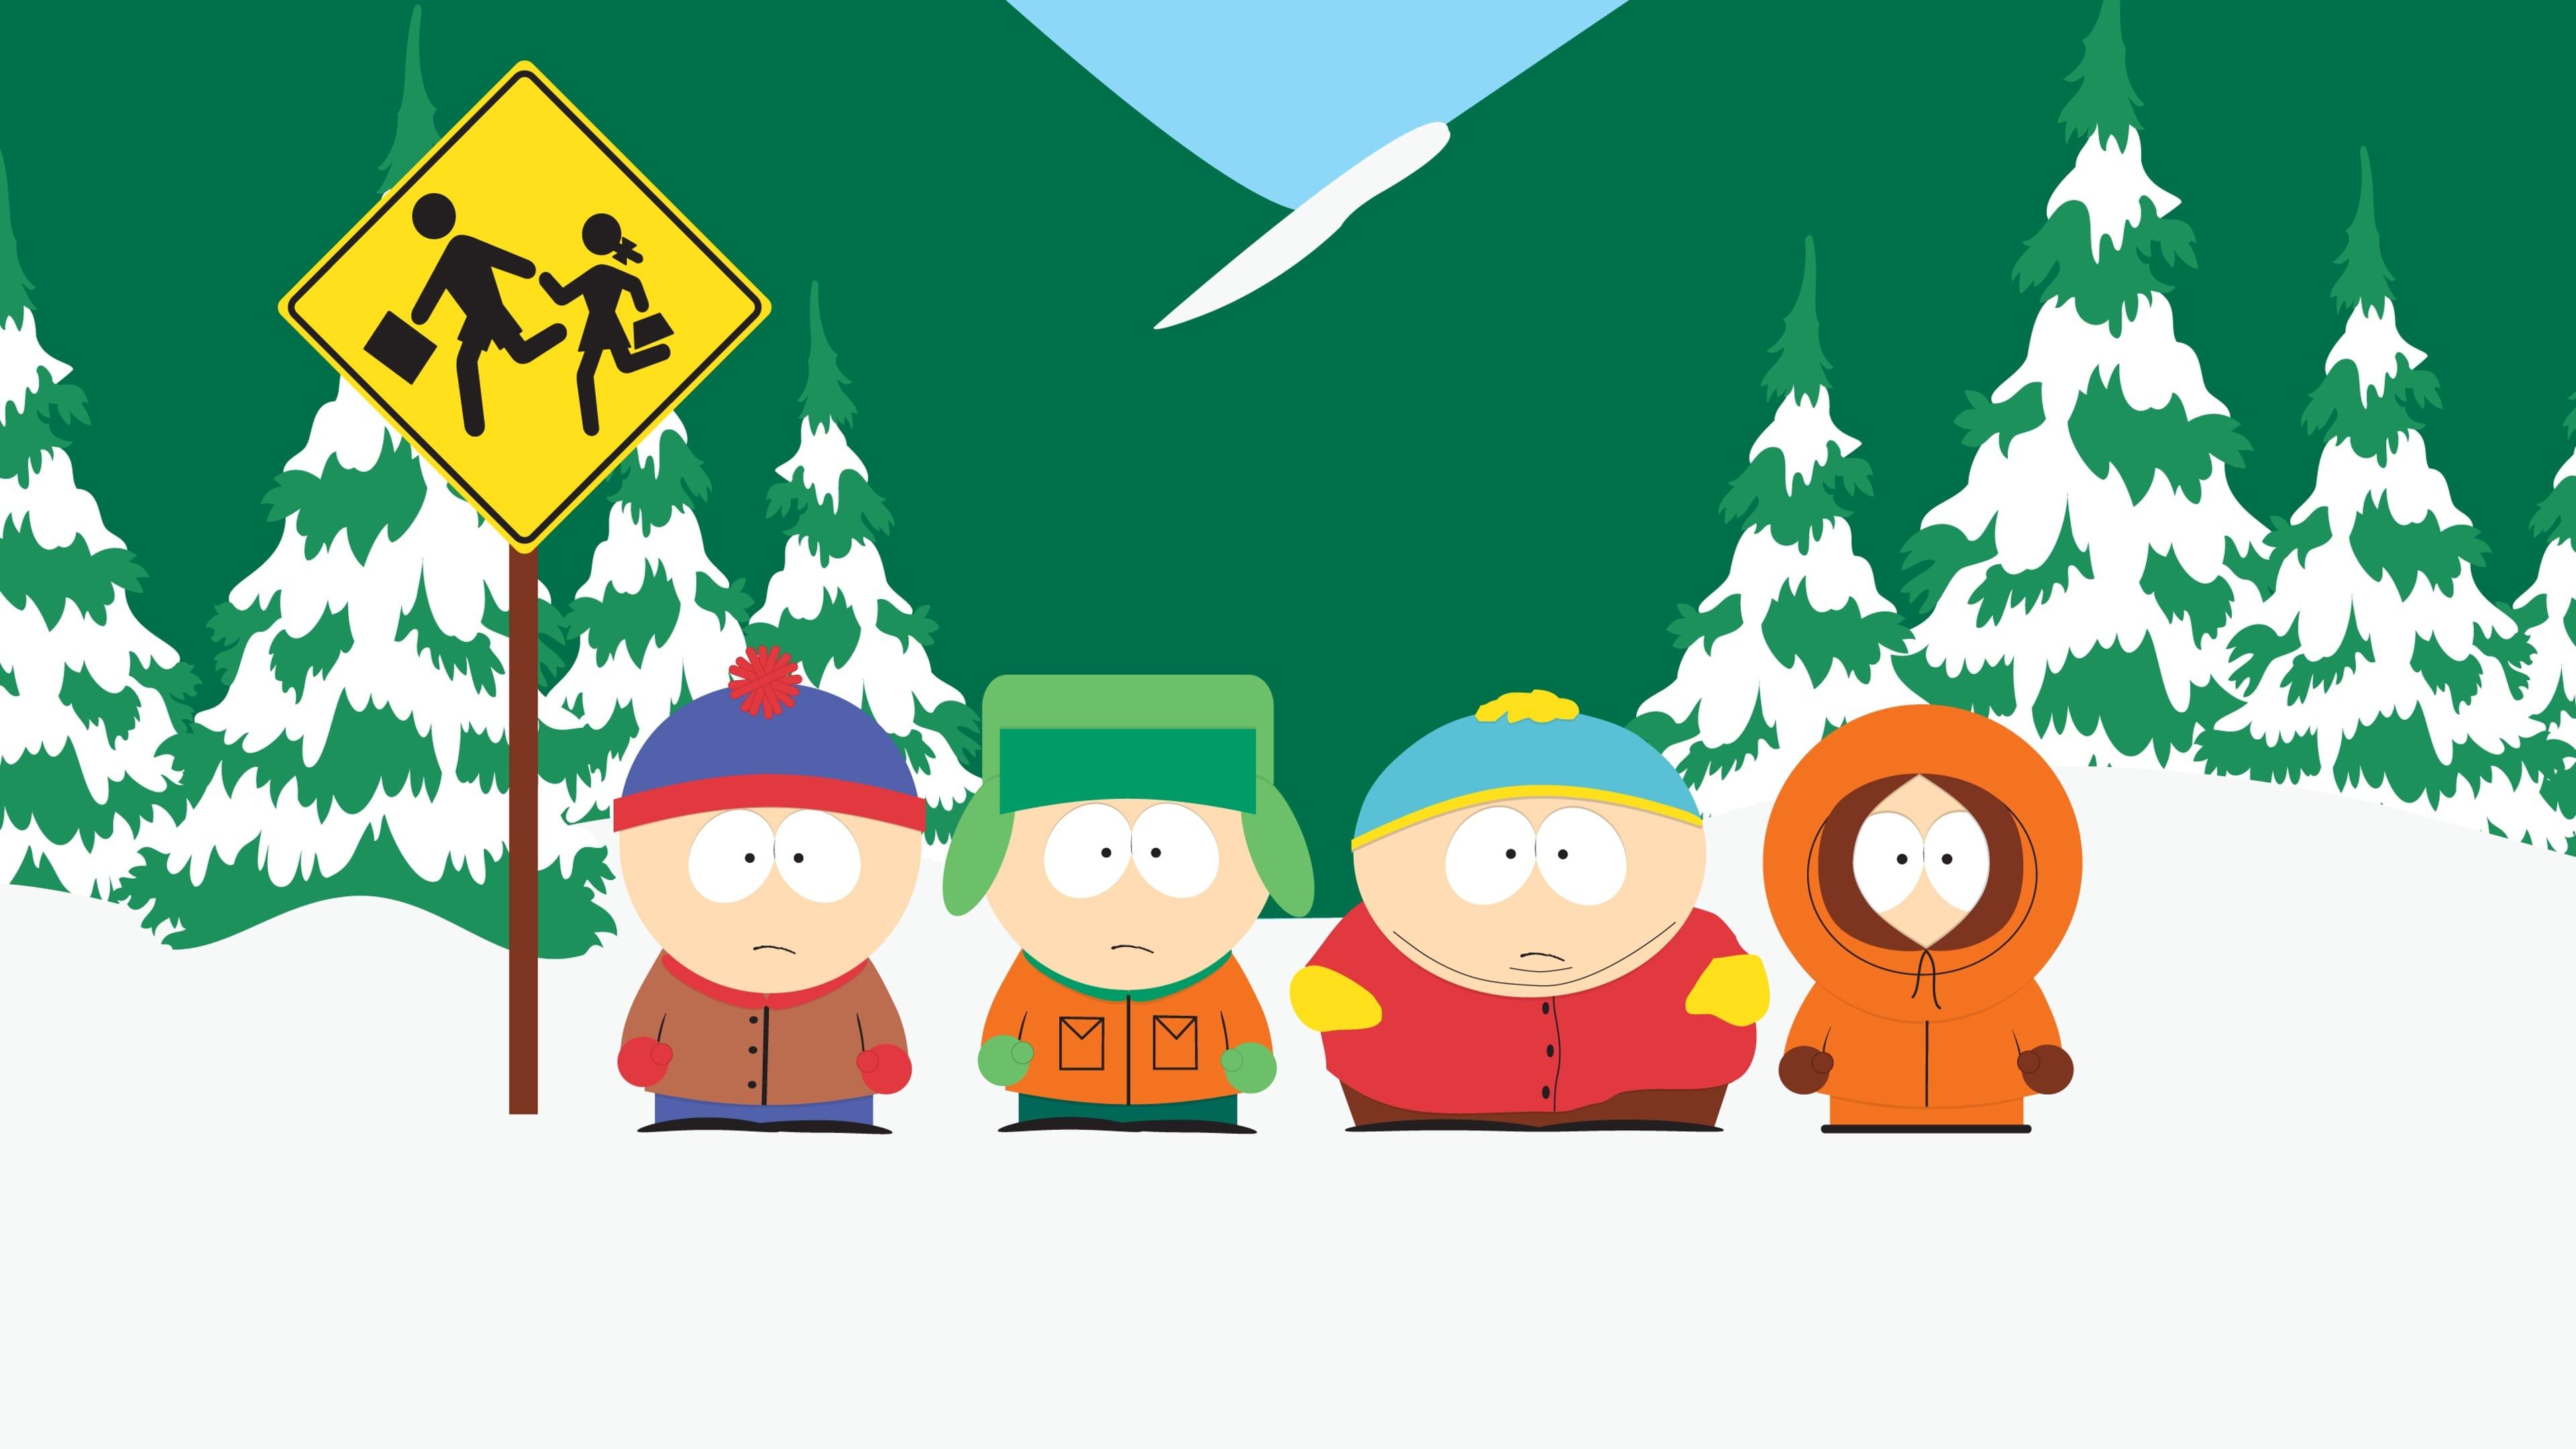 South Park backdrop